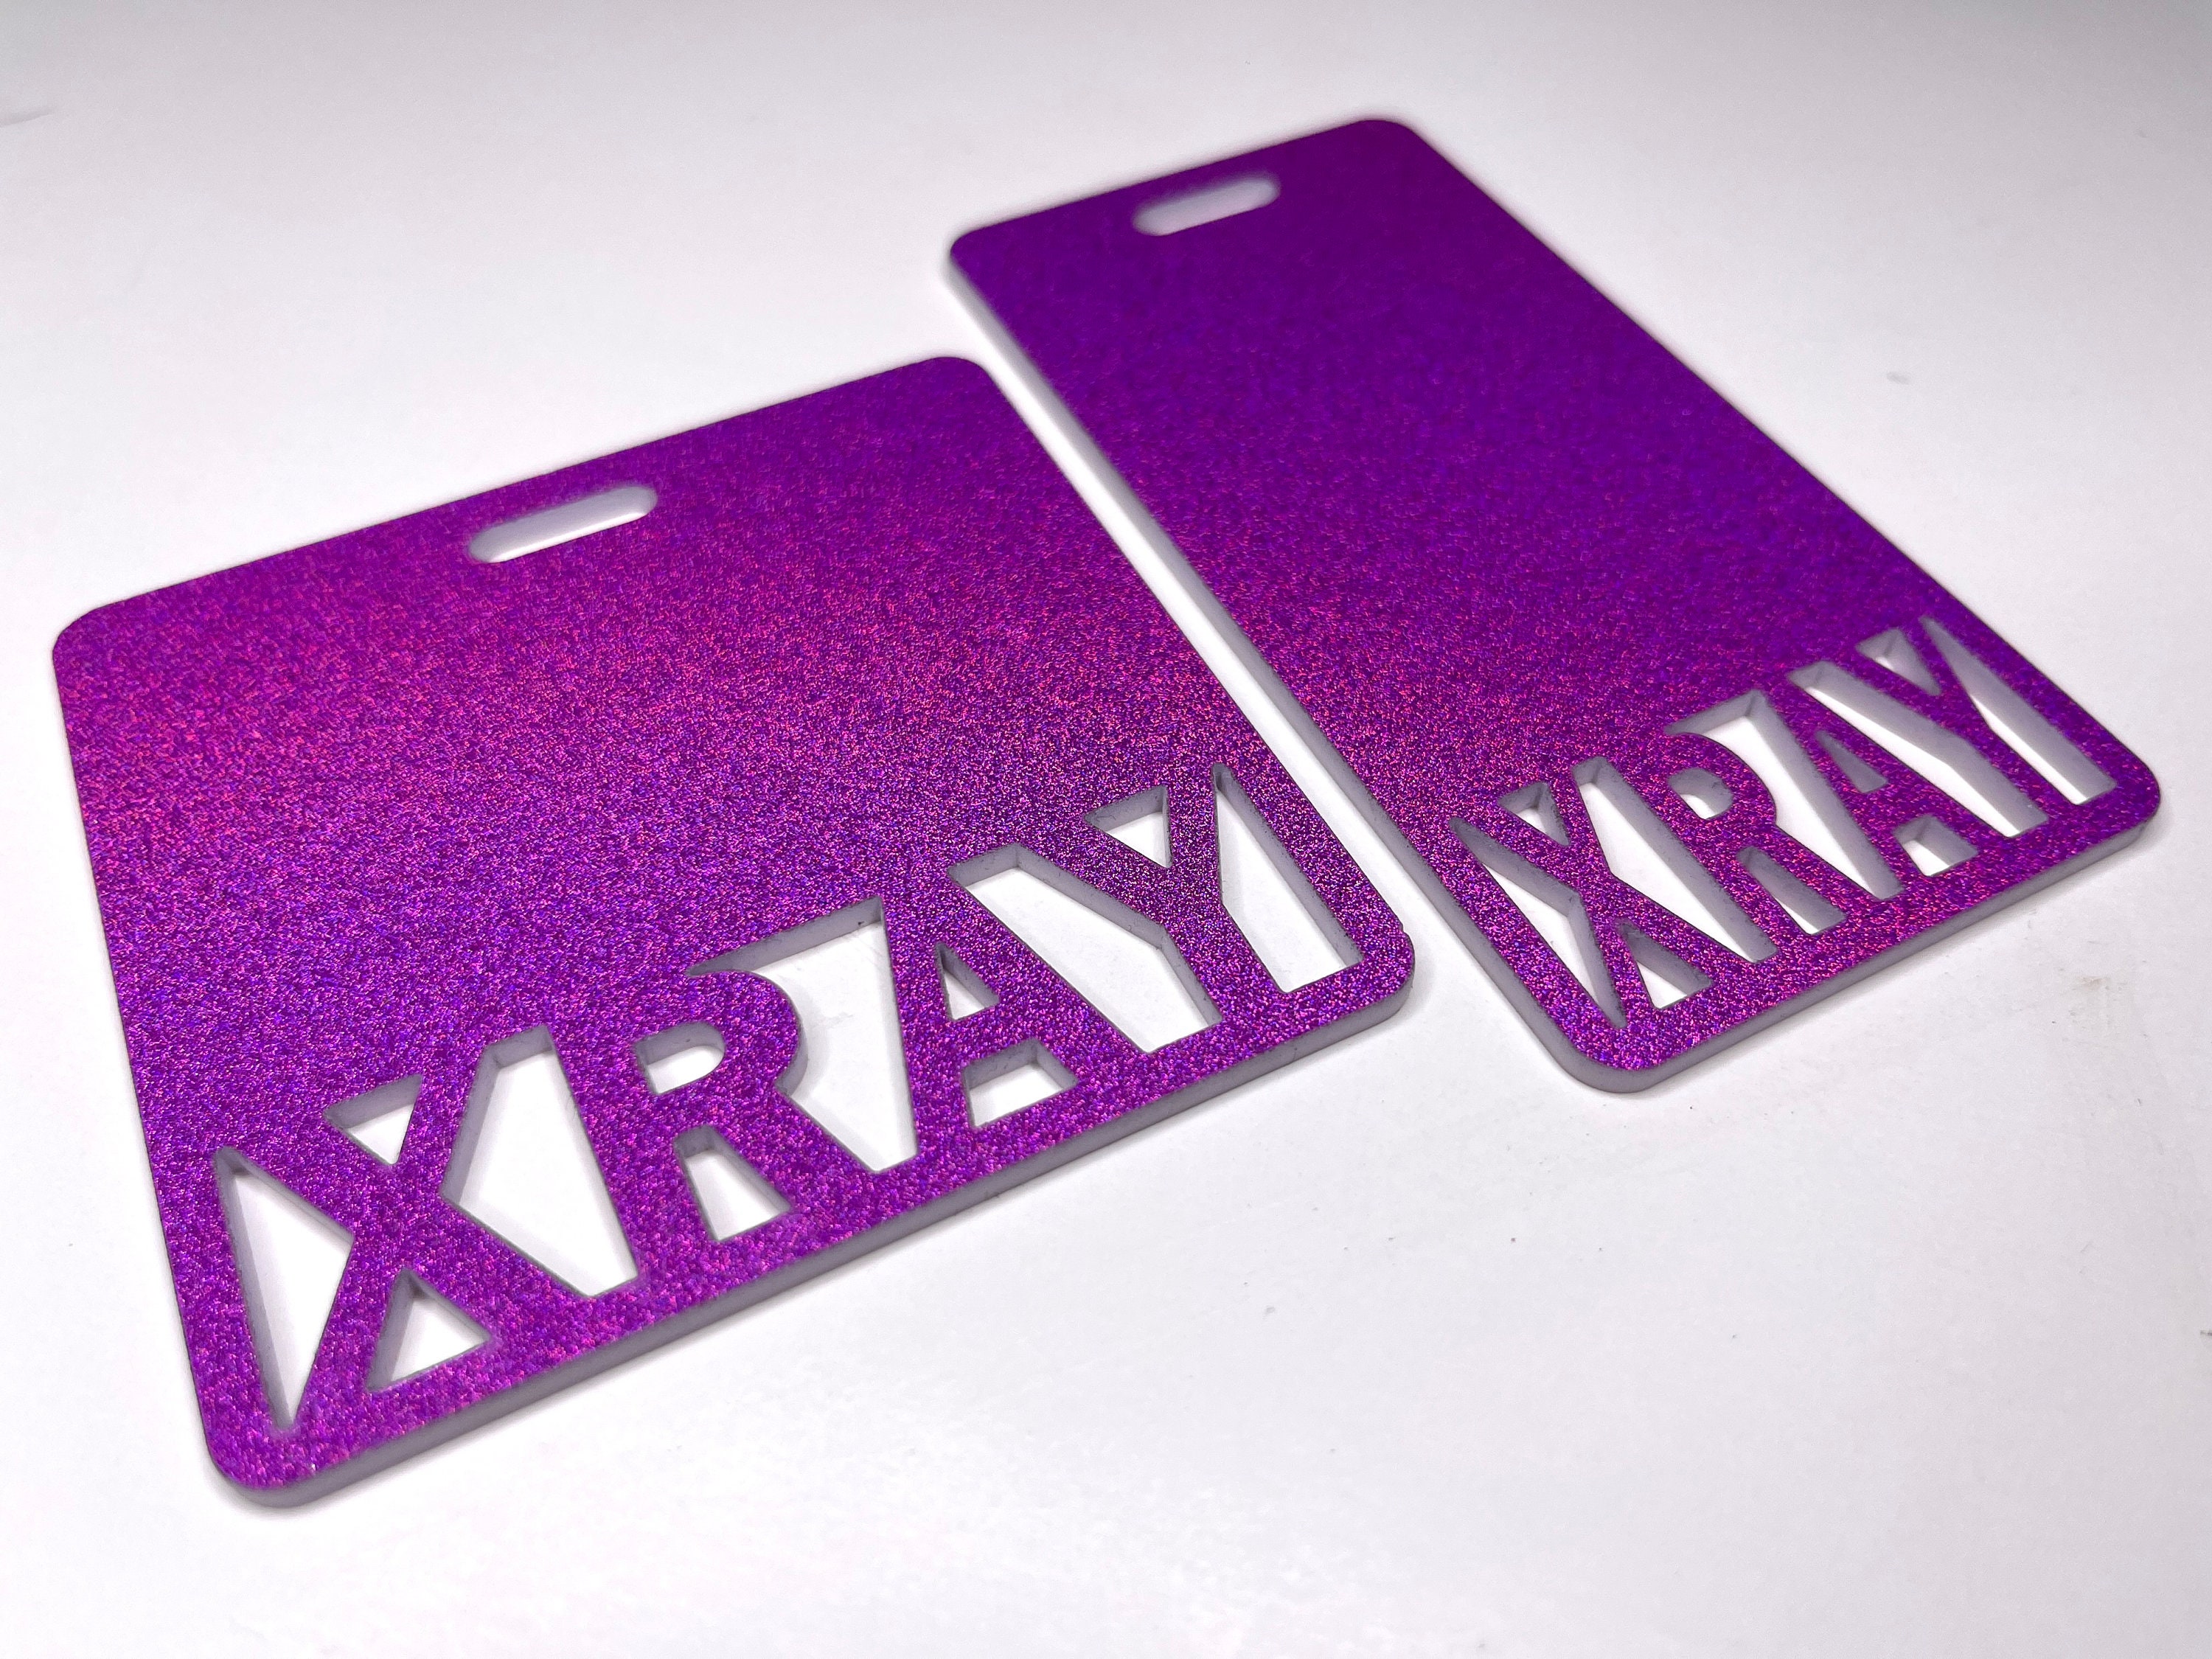 Acrylic Glitter Marker Parker Xray Marker Holder Acrylic Badge